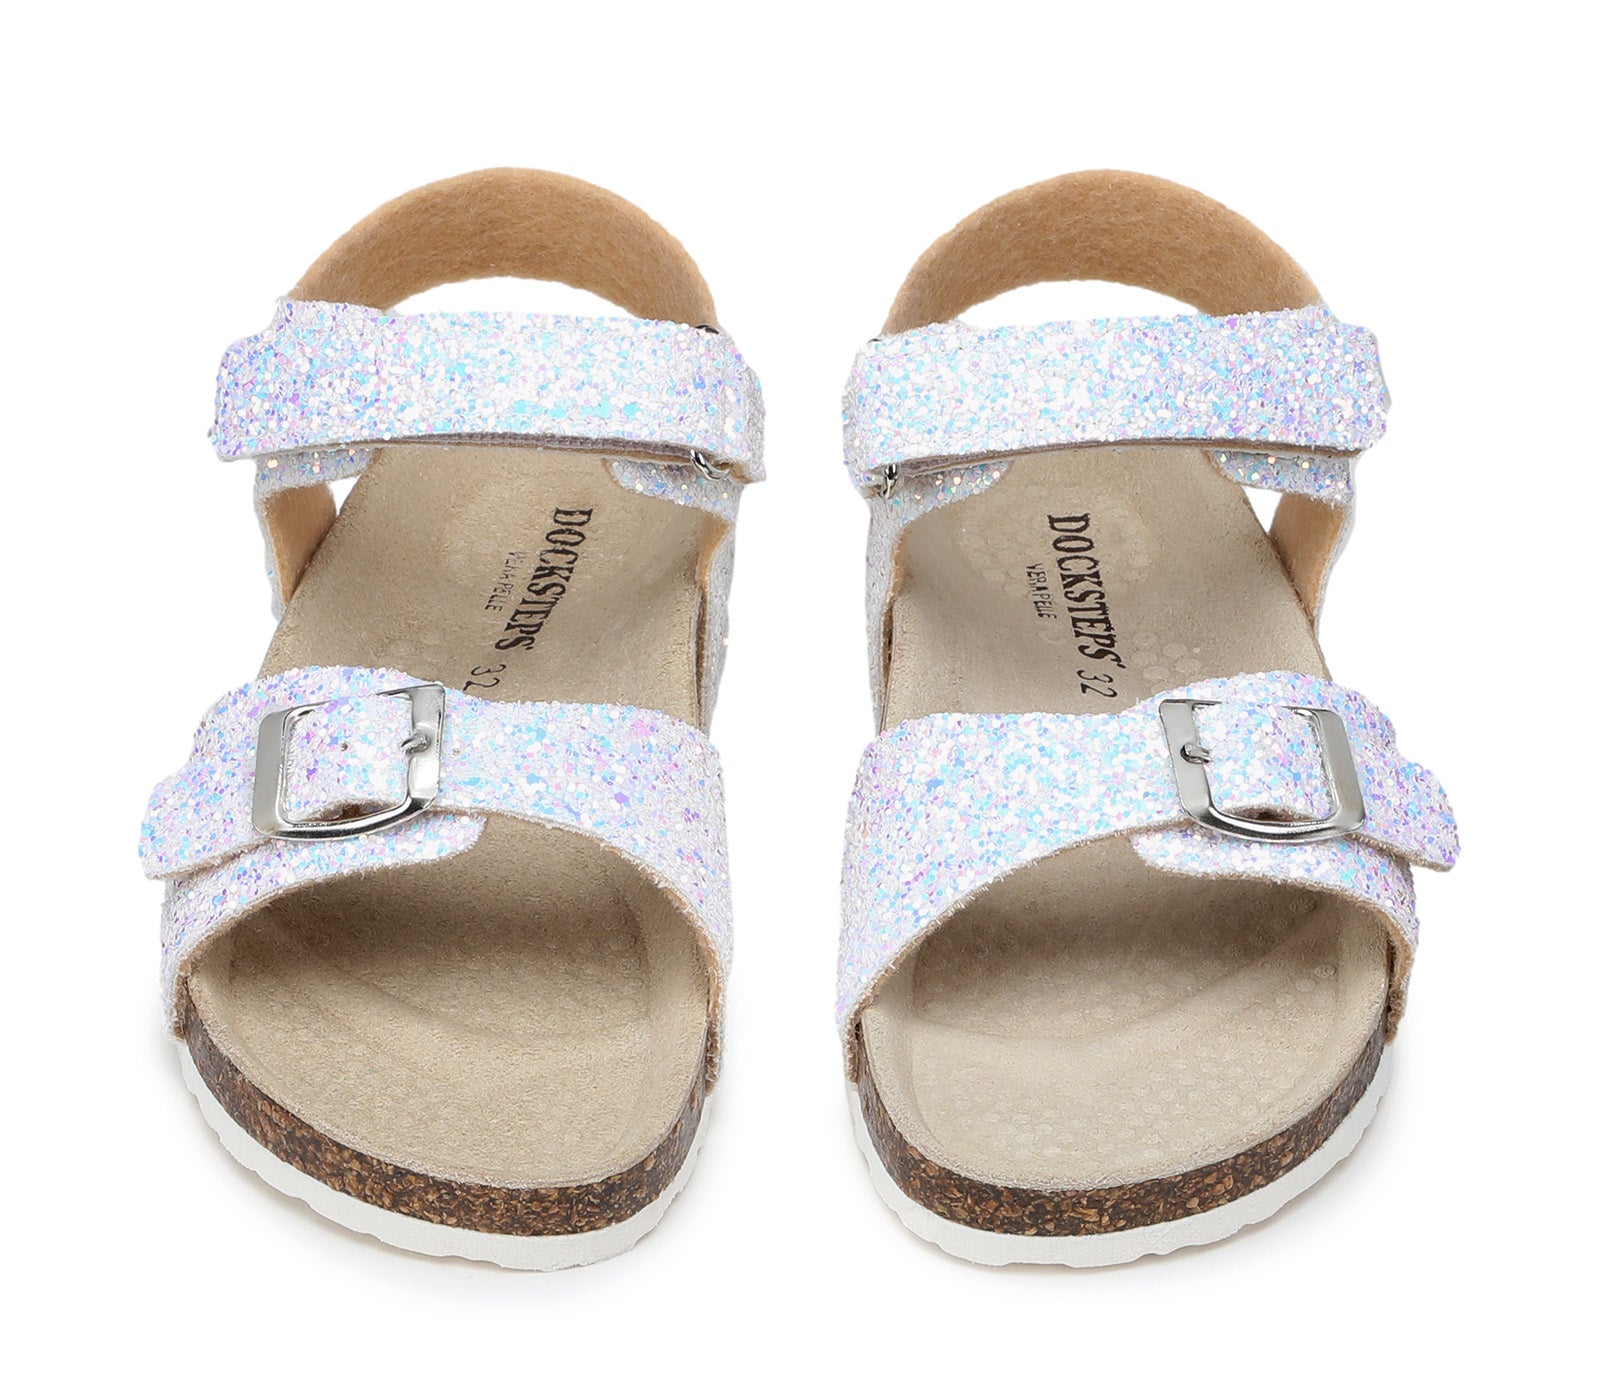 Children's White Glitter Sandals with Velcro Closure and Contoured Insole